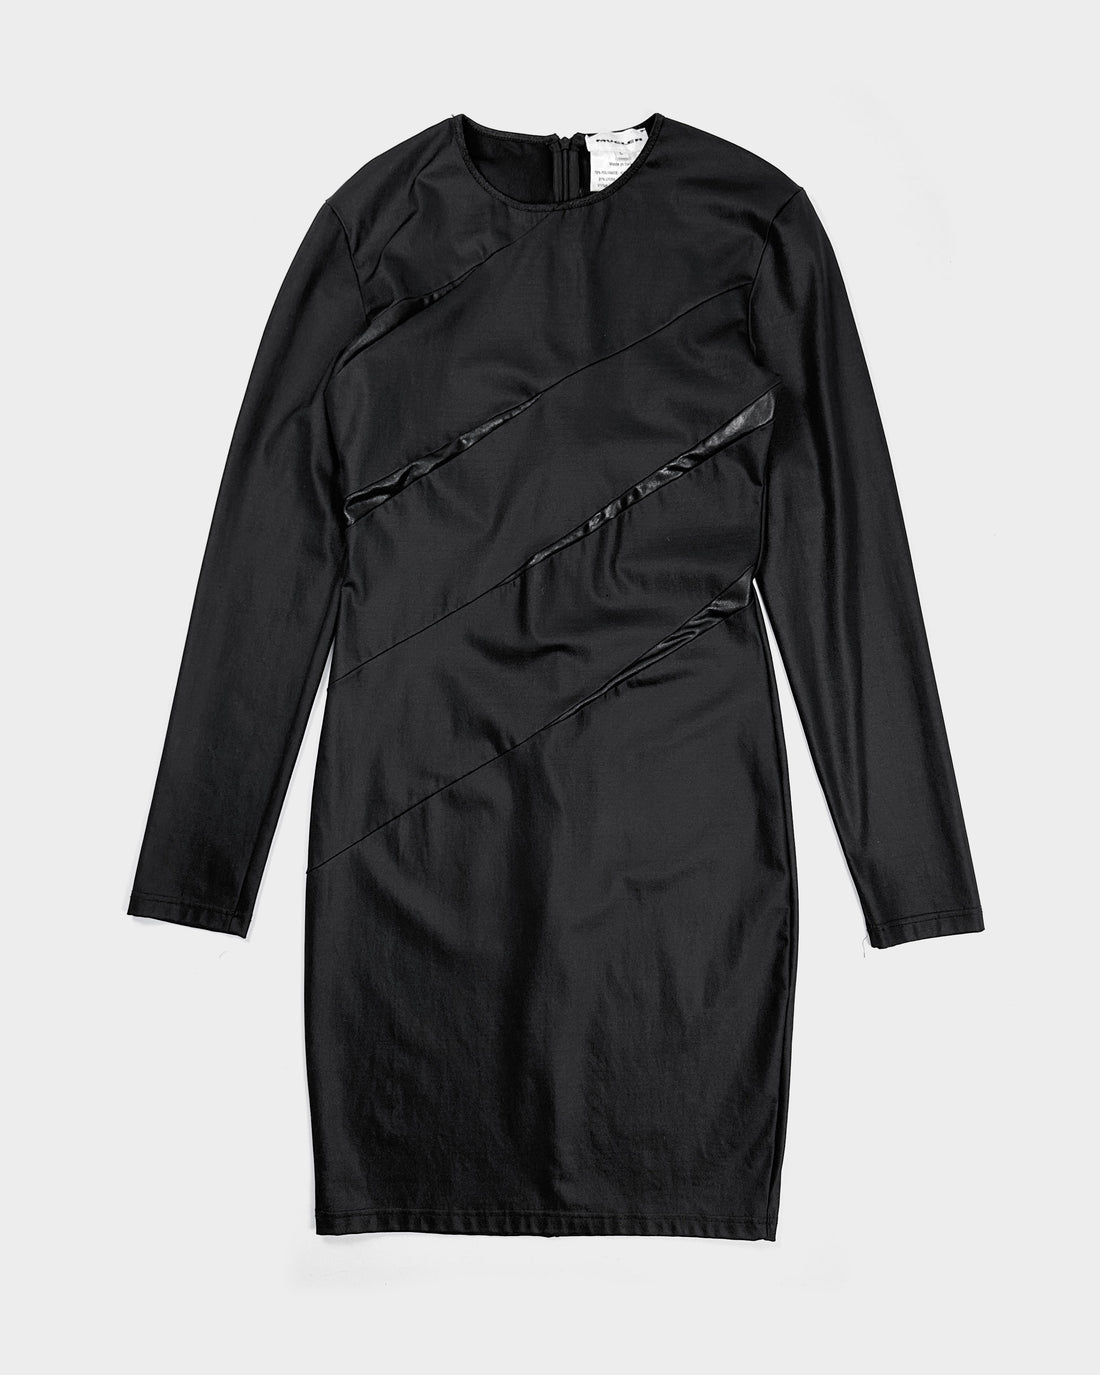 Mugler Long-sleeve Black Scrapes Dress 2000's